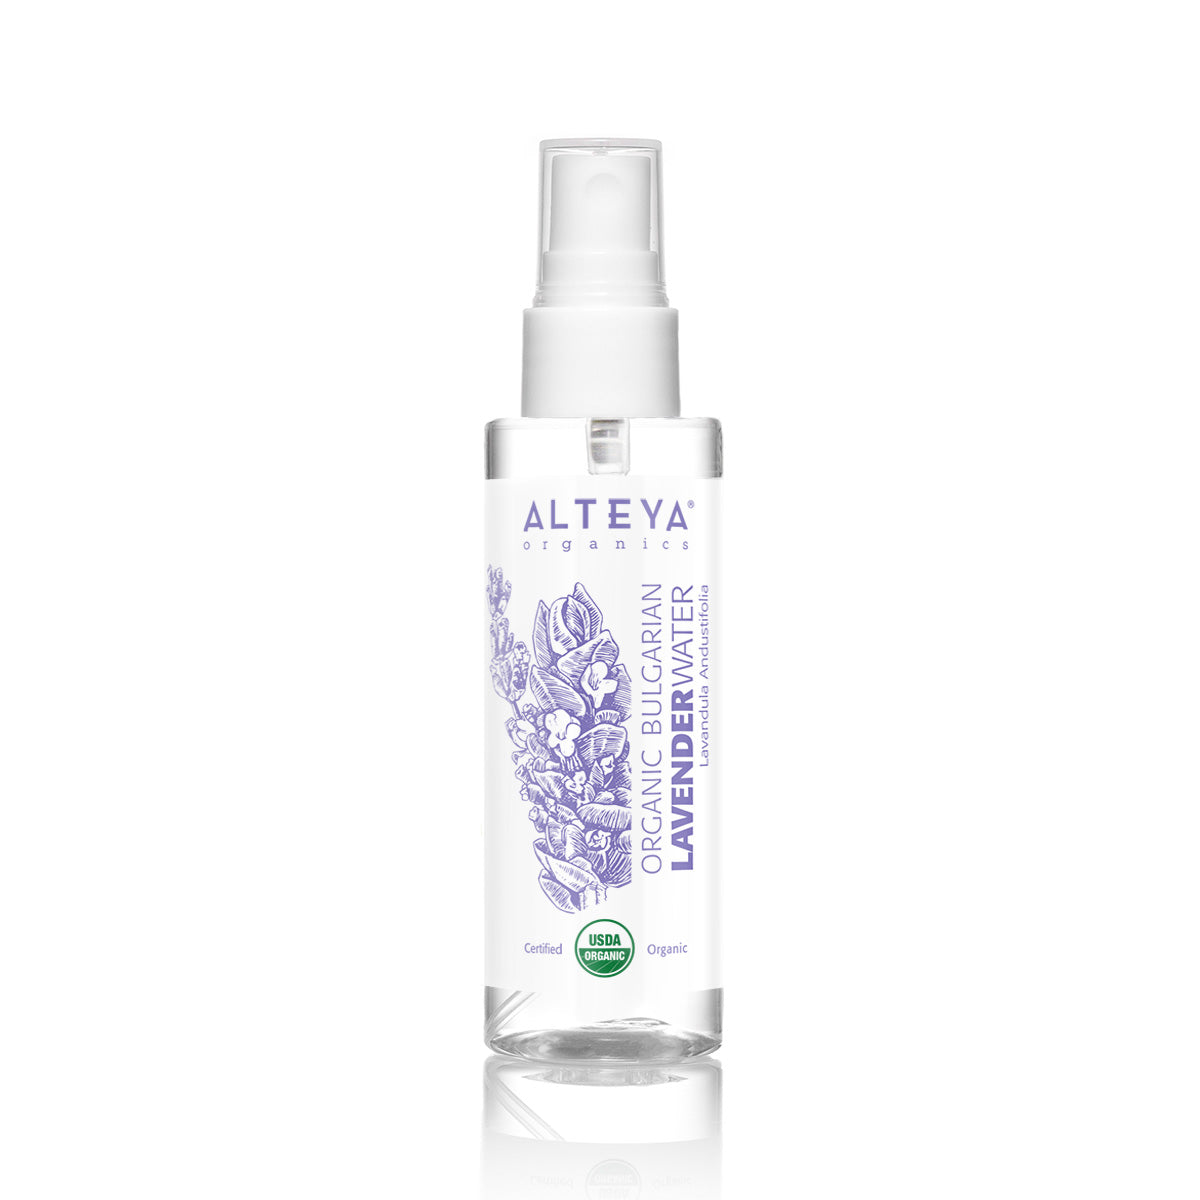 A bottle of Bulgarian Lavender Water Spray 3.4 Fl Oz from Alteya Organics, steam distilled, on a white background.